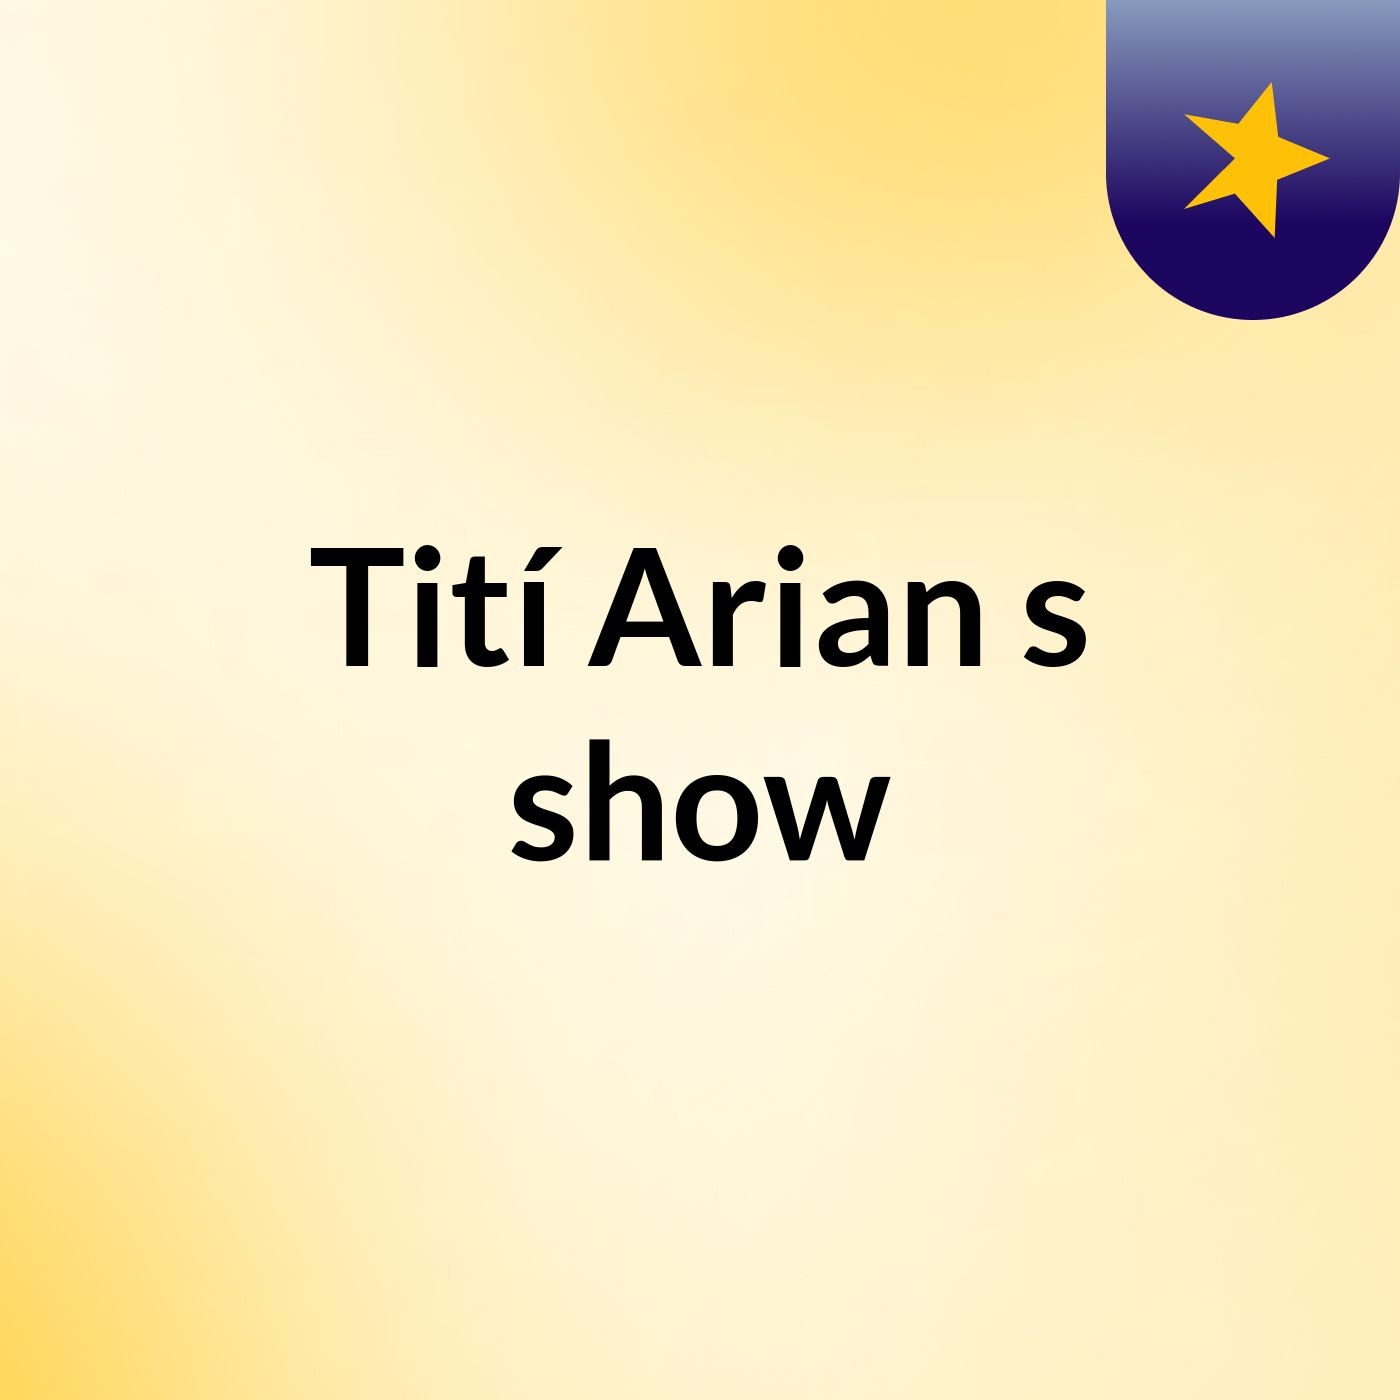 Tití Arian's show